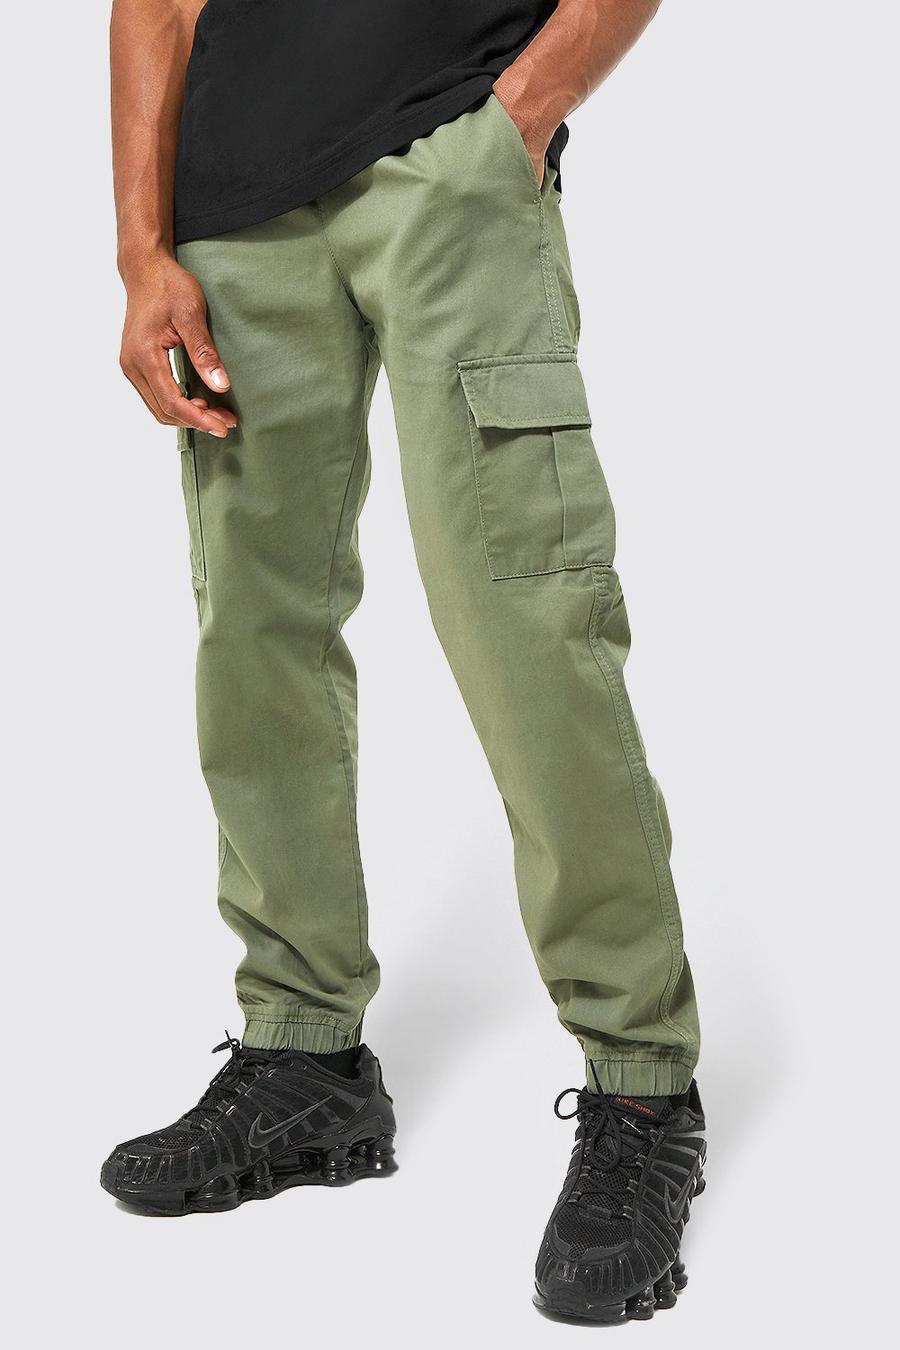 https://media.boohoo.com/i/boohoo/amm08184_khaki_xl/male-khaki-elastic-waist-slim-fit-cargo-trouser/?w=900&qlt=default&fmt.jp2.qlt=70&fmt=auto&sm=fit